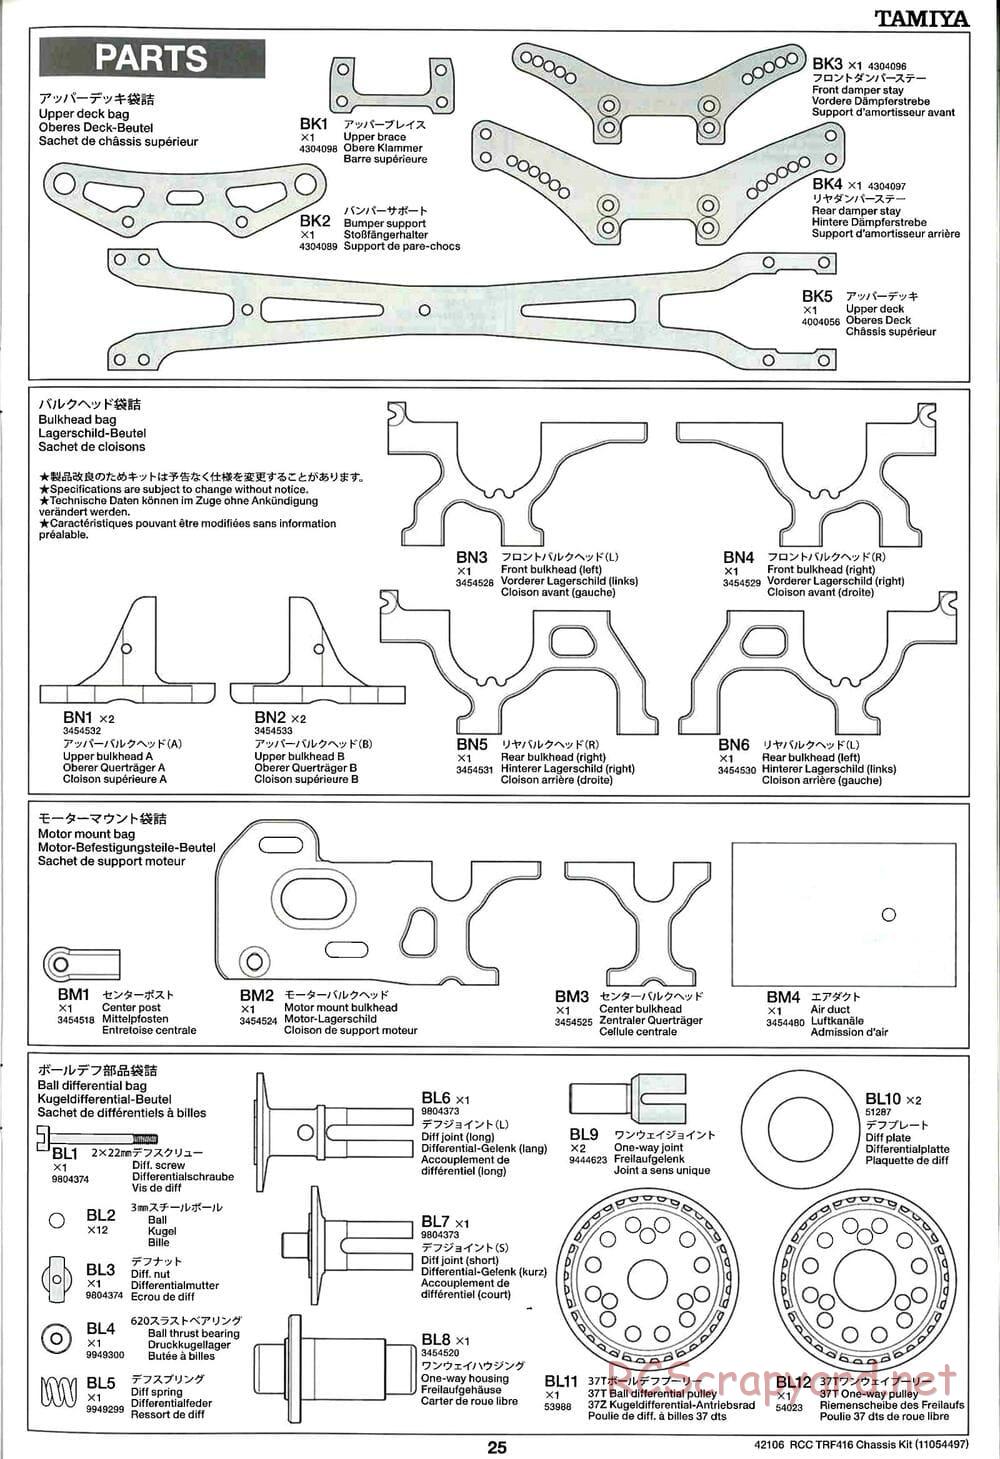 Tamiya - TRF416 Chassis - Manual - Page 25